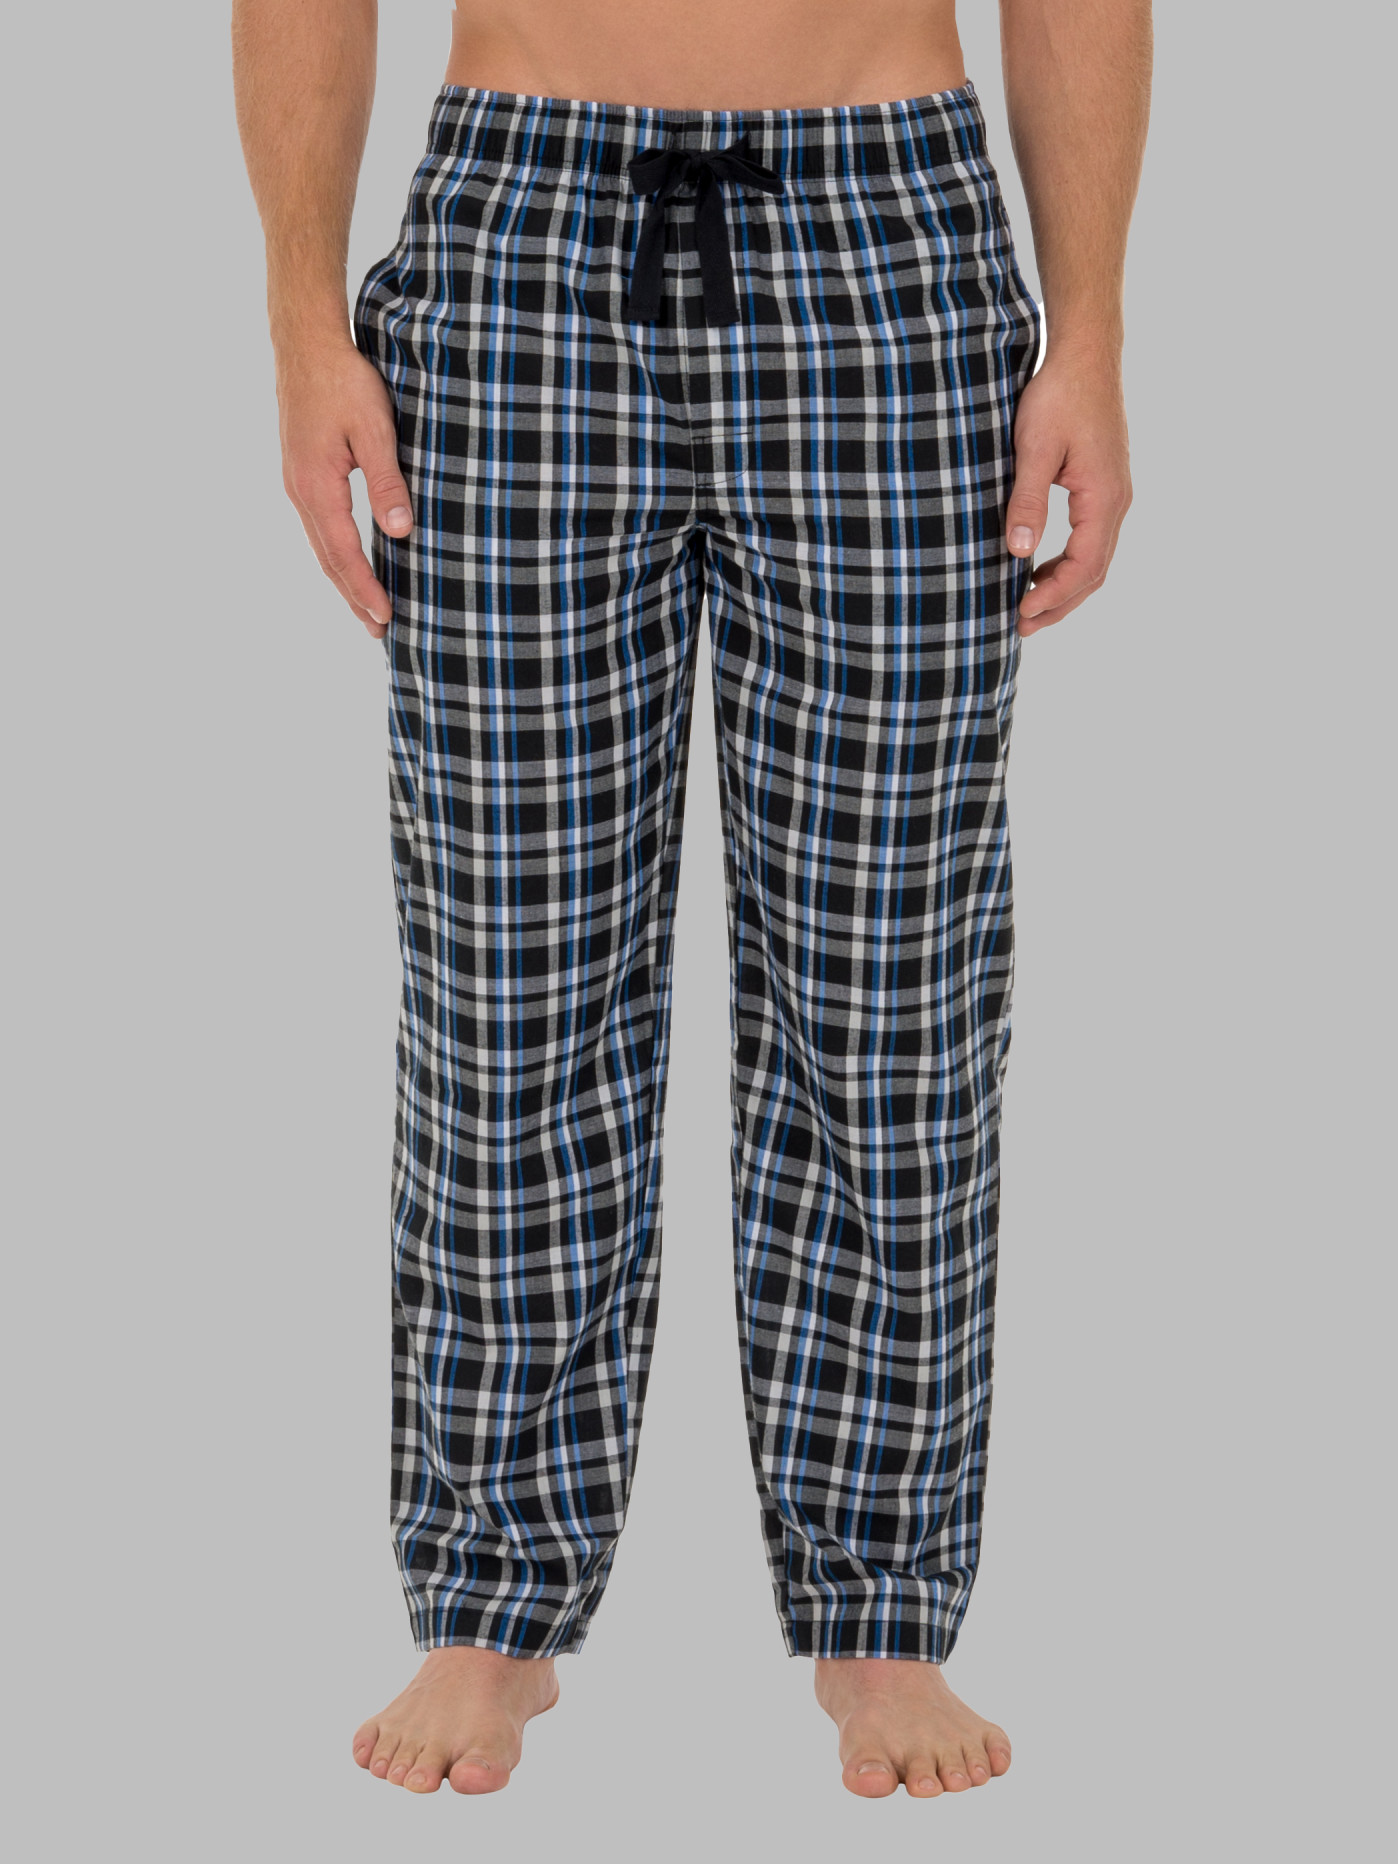 Women Plaid Pajama Pants Sleepwear, Women Lounge Pants Comfy With P